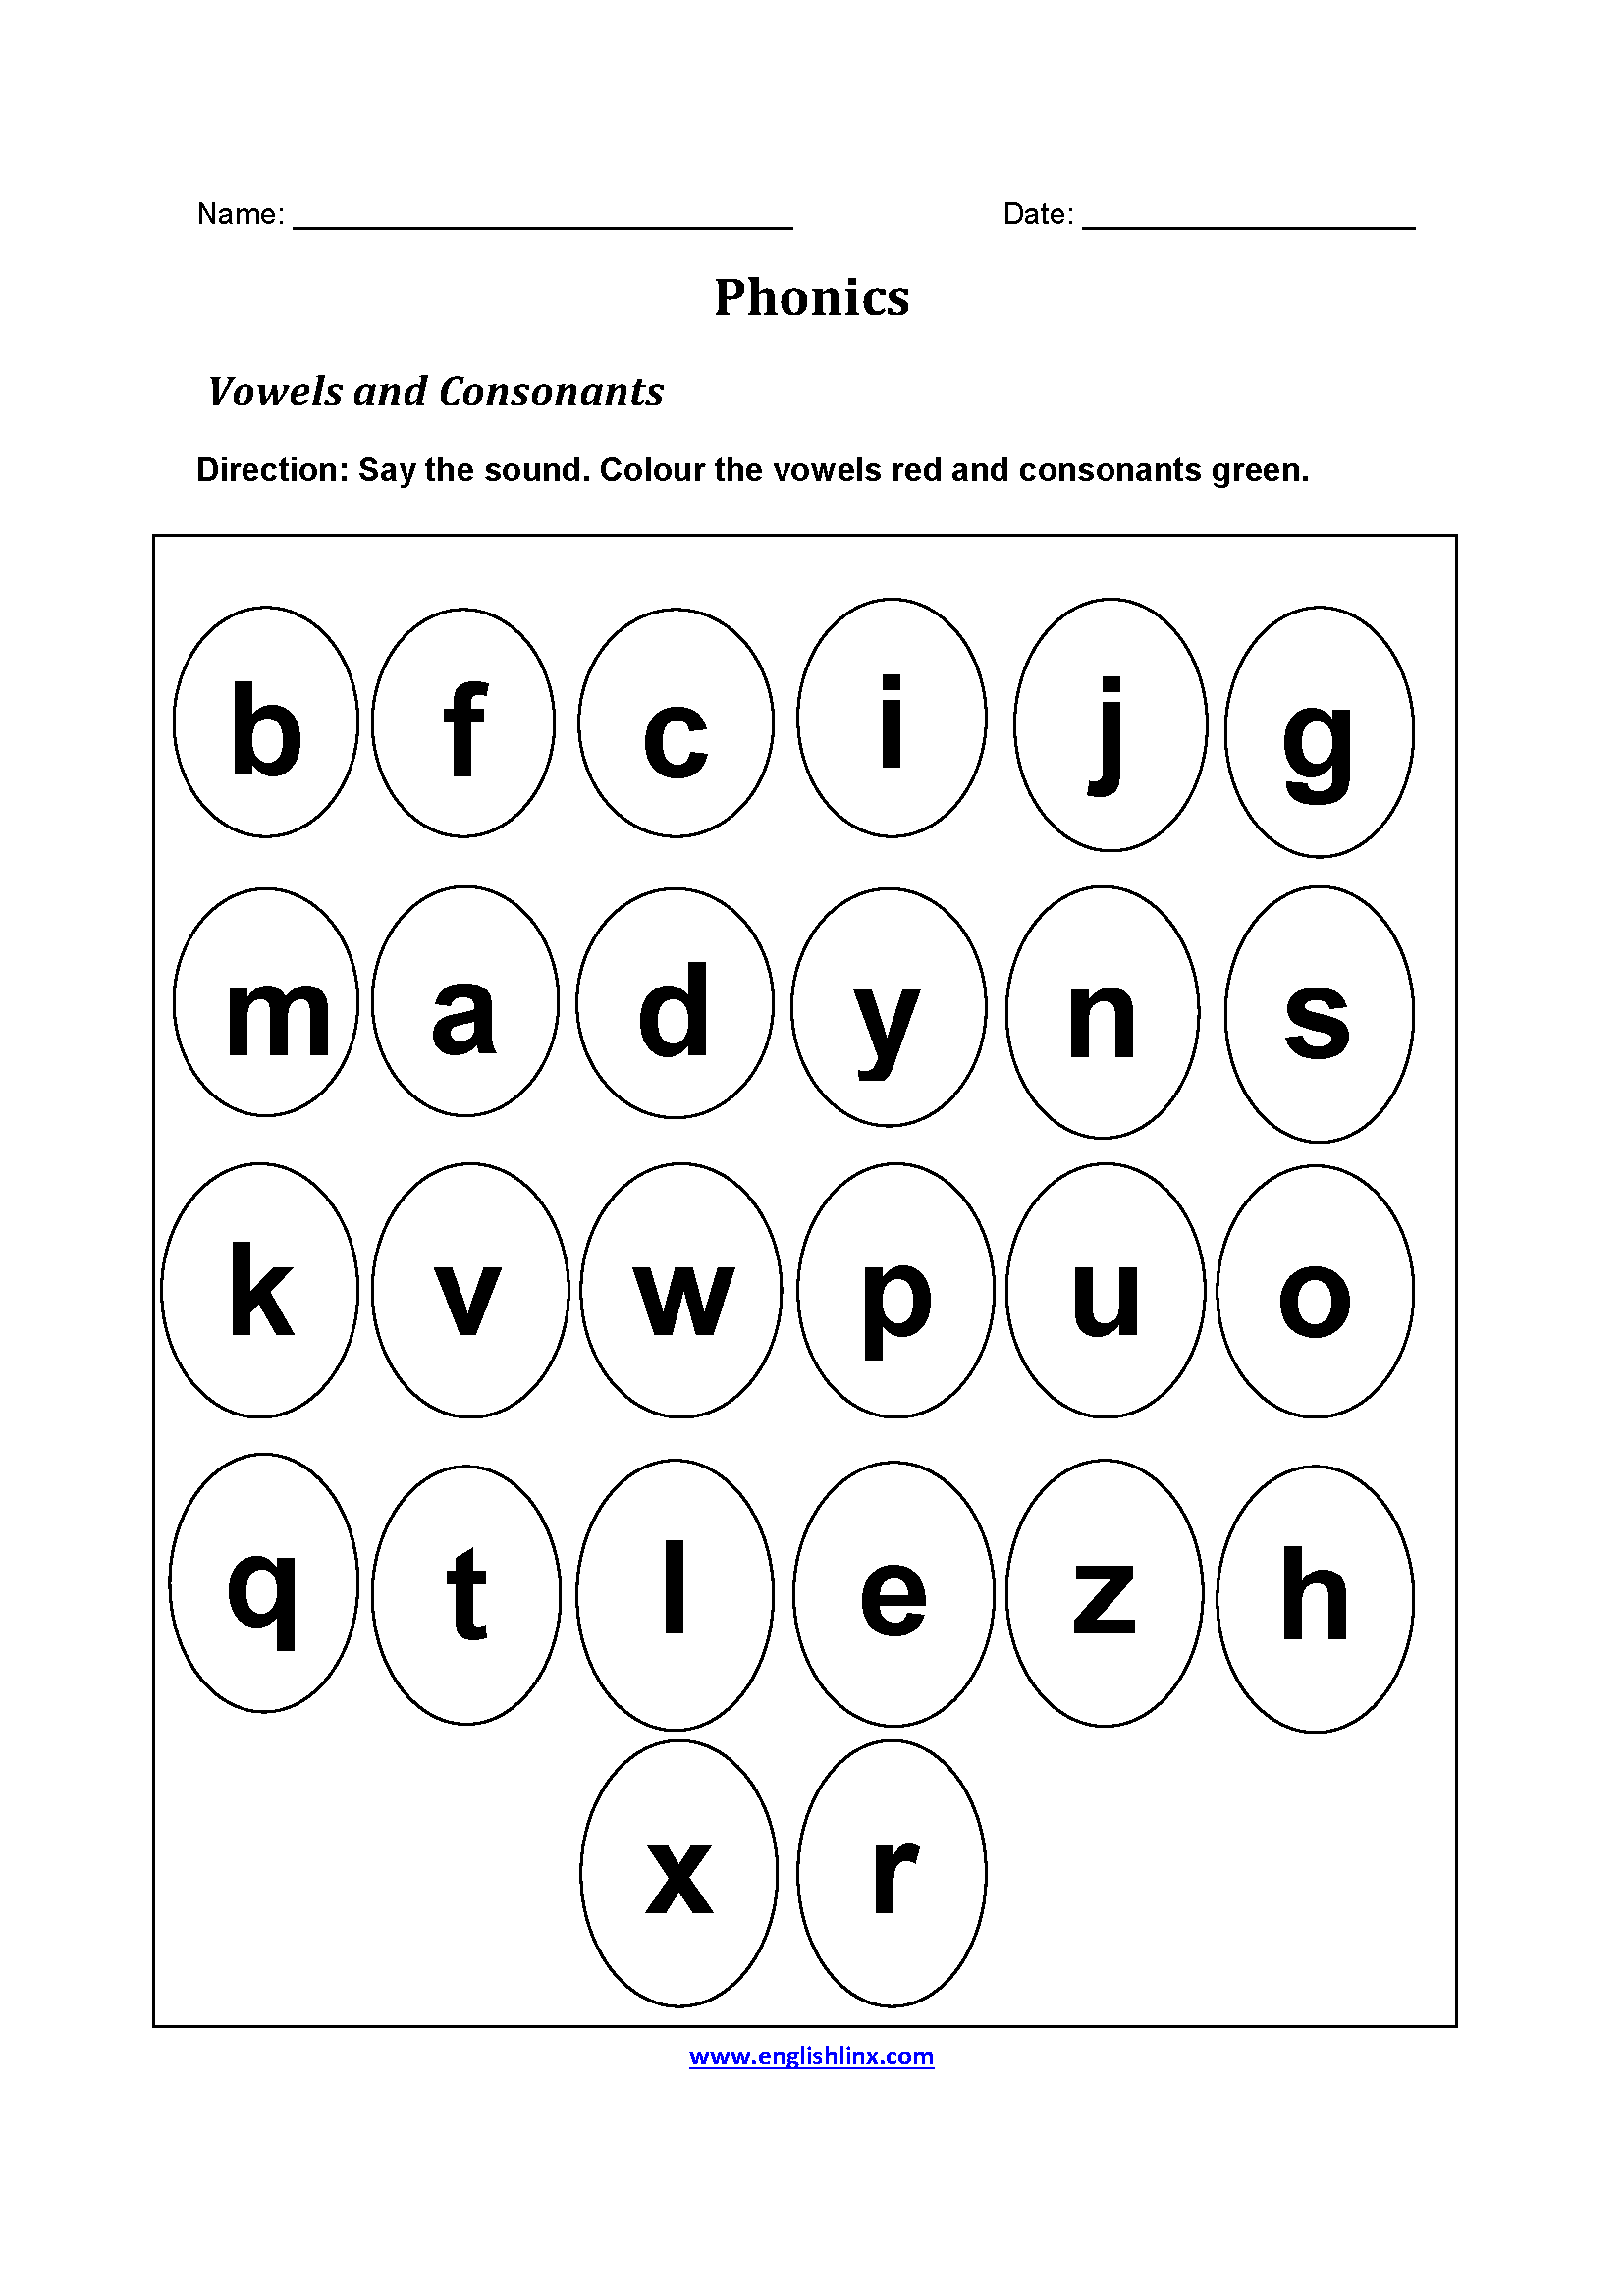 Vowels and Consonants Phonics Worksheets